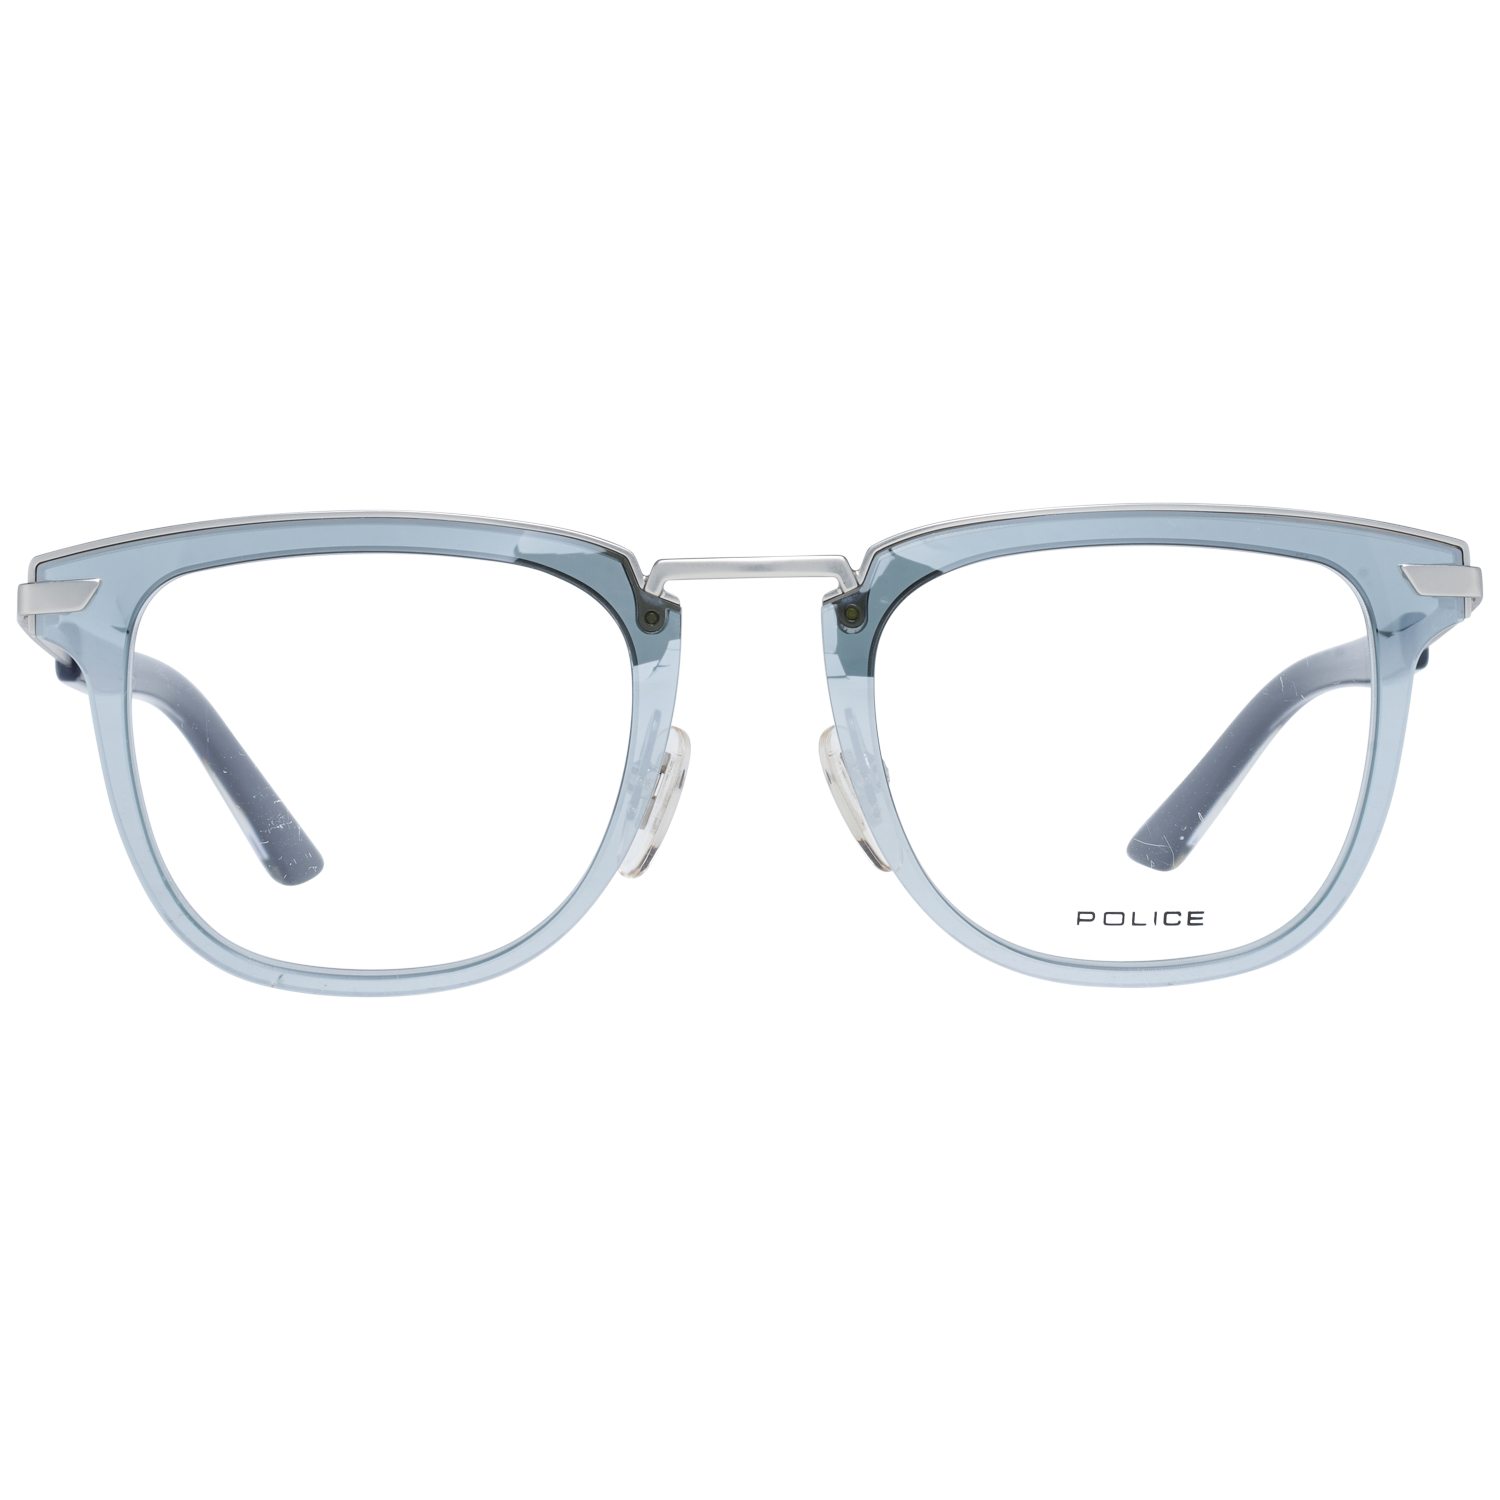 Police Frames Police Glasses Frames VPL566 0581 48 Eyeglasses Eyewear UK USA Australia 